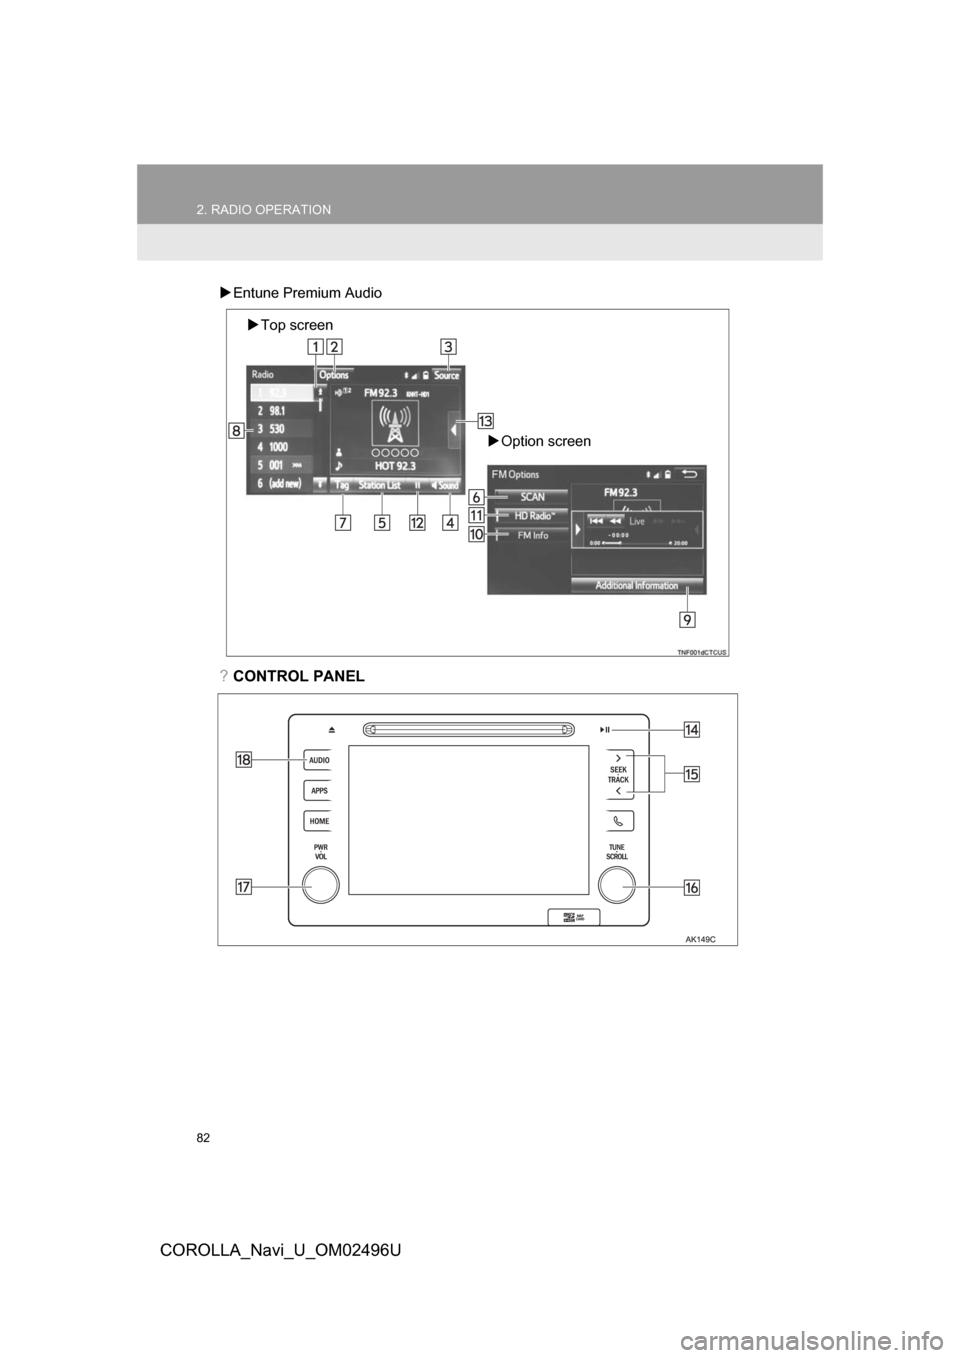 TOYOTA COROLLA 2017 11.G Navigation Manual 82
2. RADIO OPERATION
COROLLA_Navi_U_OM02496U
Entune Premium Audio
?CONTROL PANEL
Top screen
Option screen 